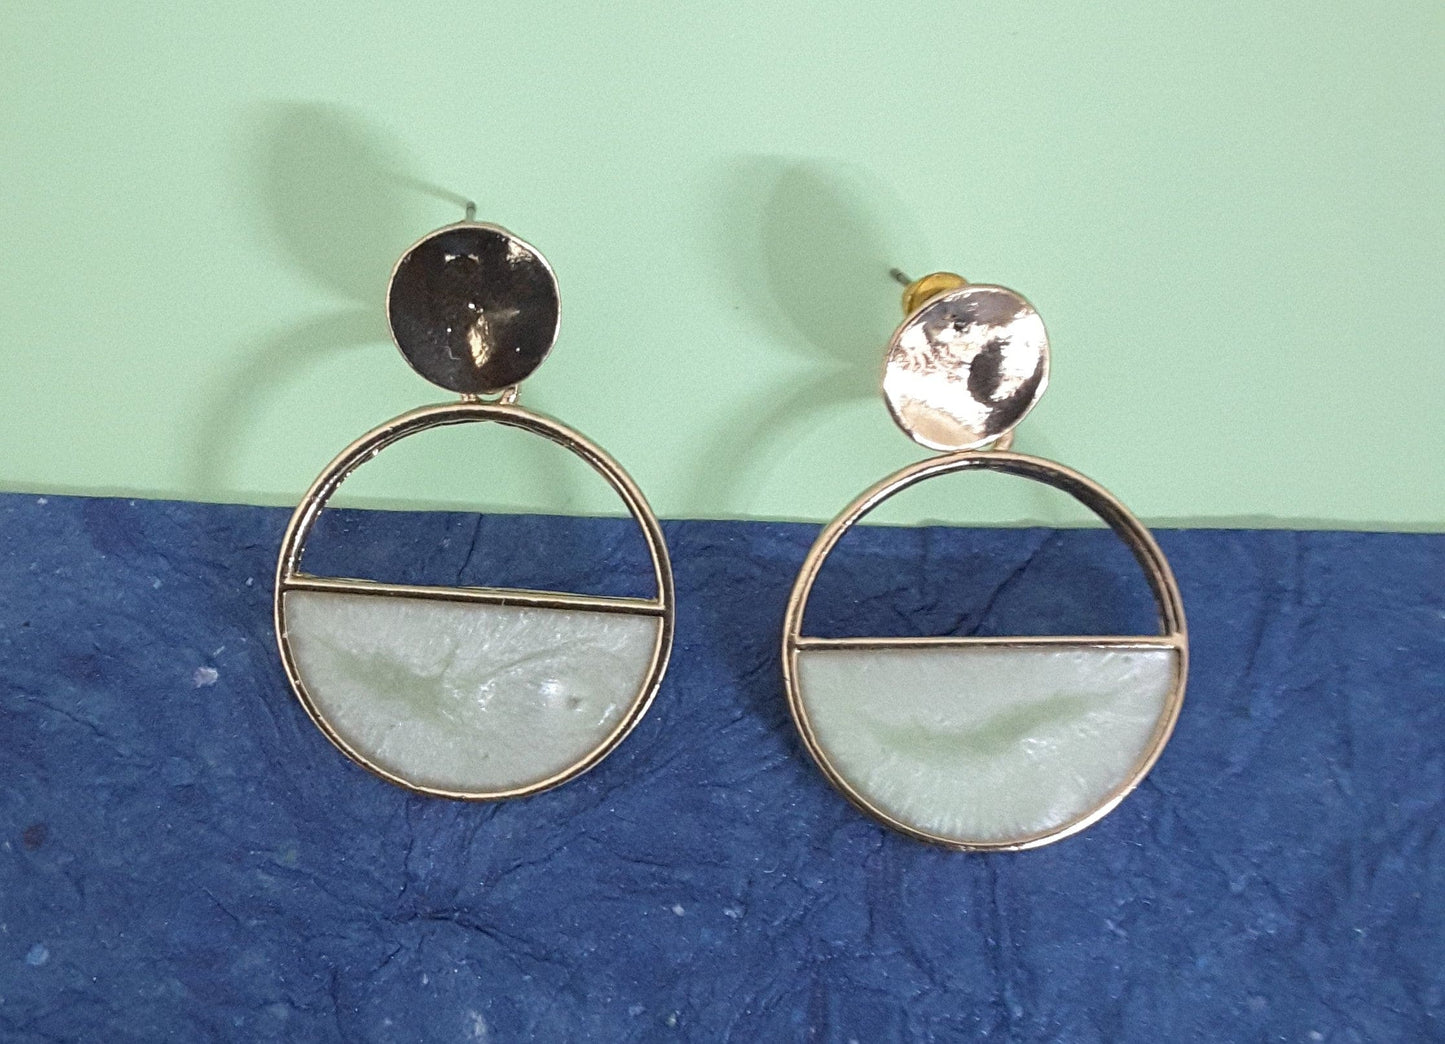 Moonstruck Round Dangle Earrings for Women (Green) - www.MoonstruckINC.com